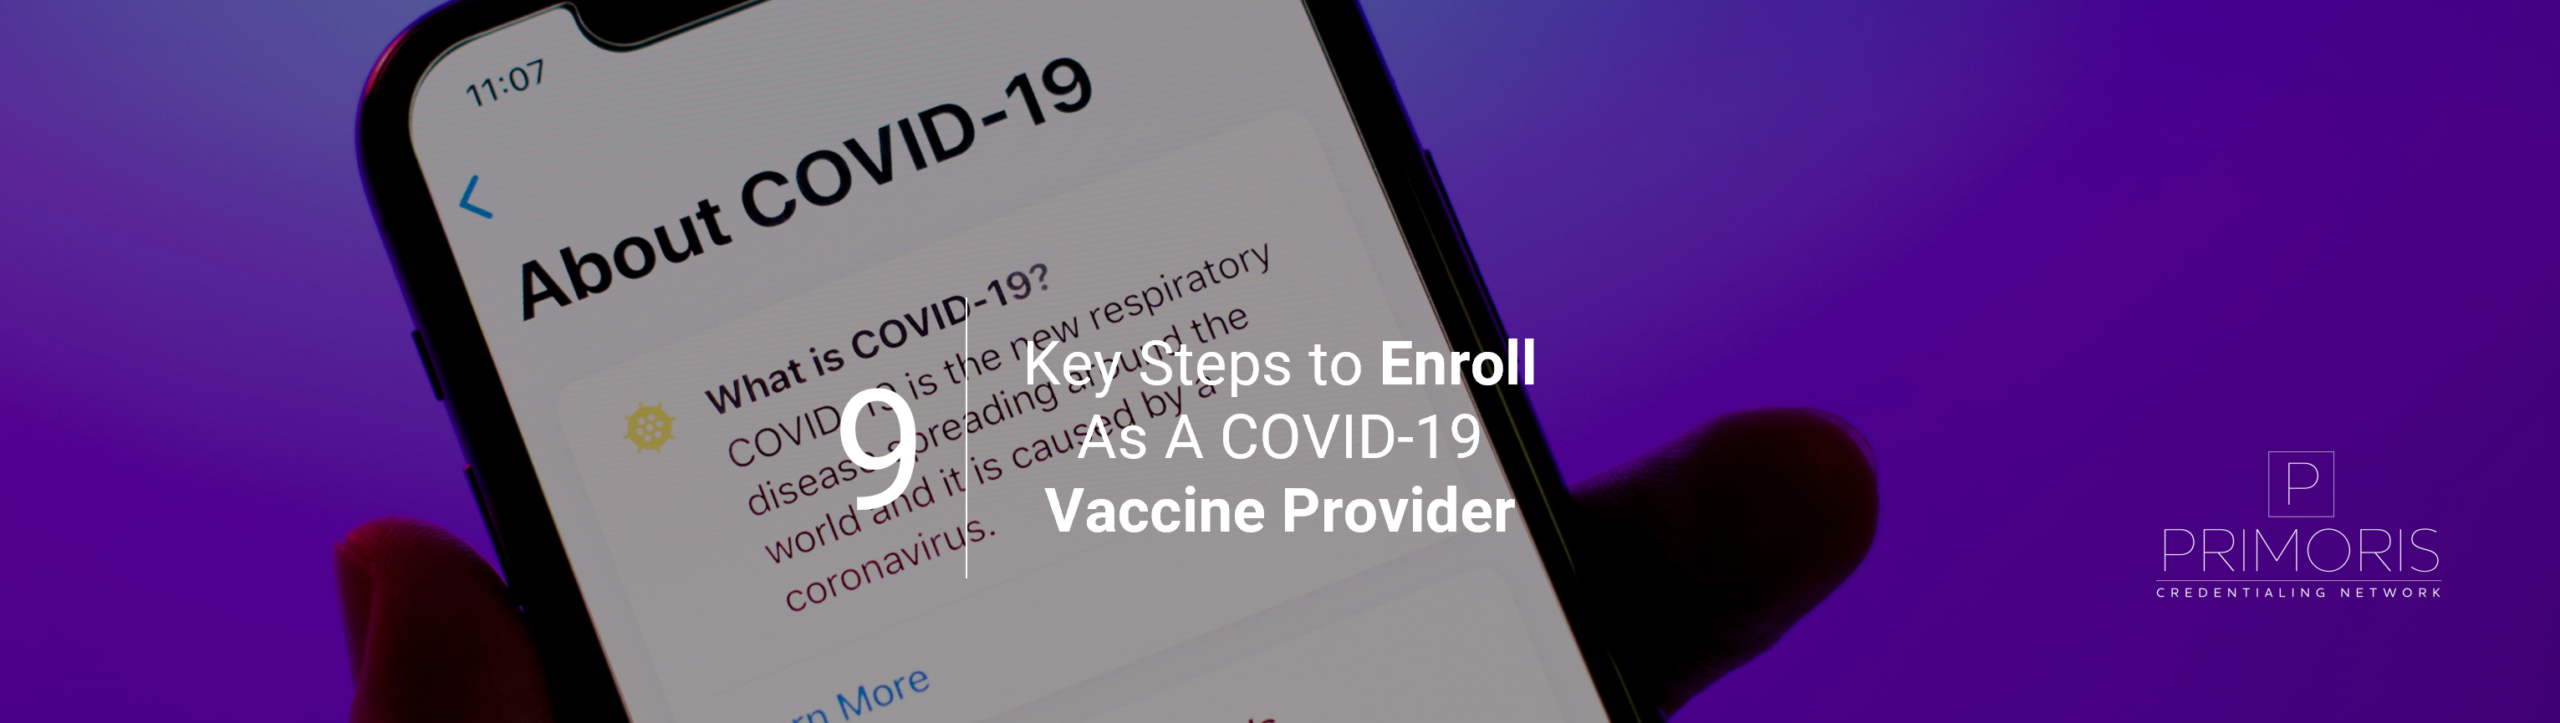 9 Key Steps to enroll as a COVID-19 vaccine provider